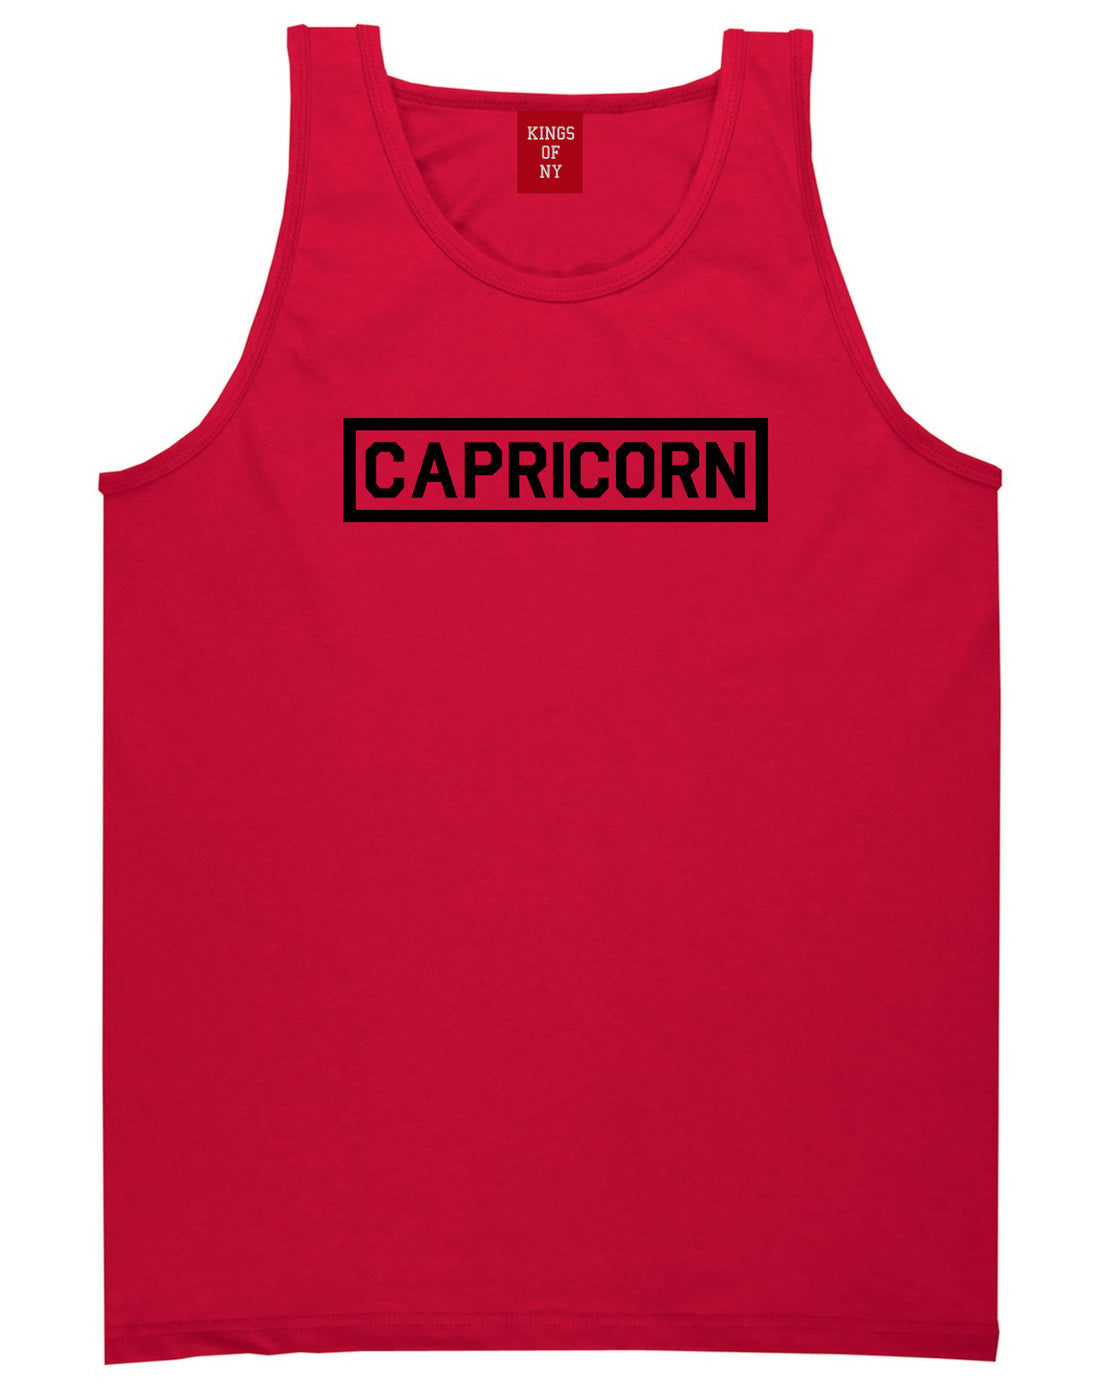 Capricorn Horoscope Sign Mens Red Tank Top Shirt by KINGS OF NY